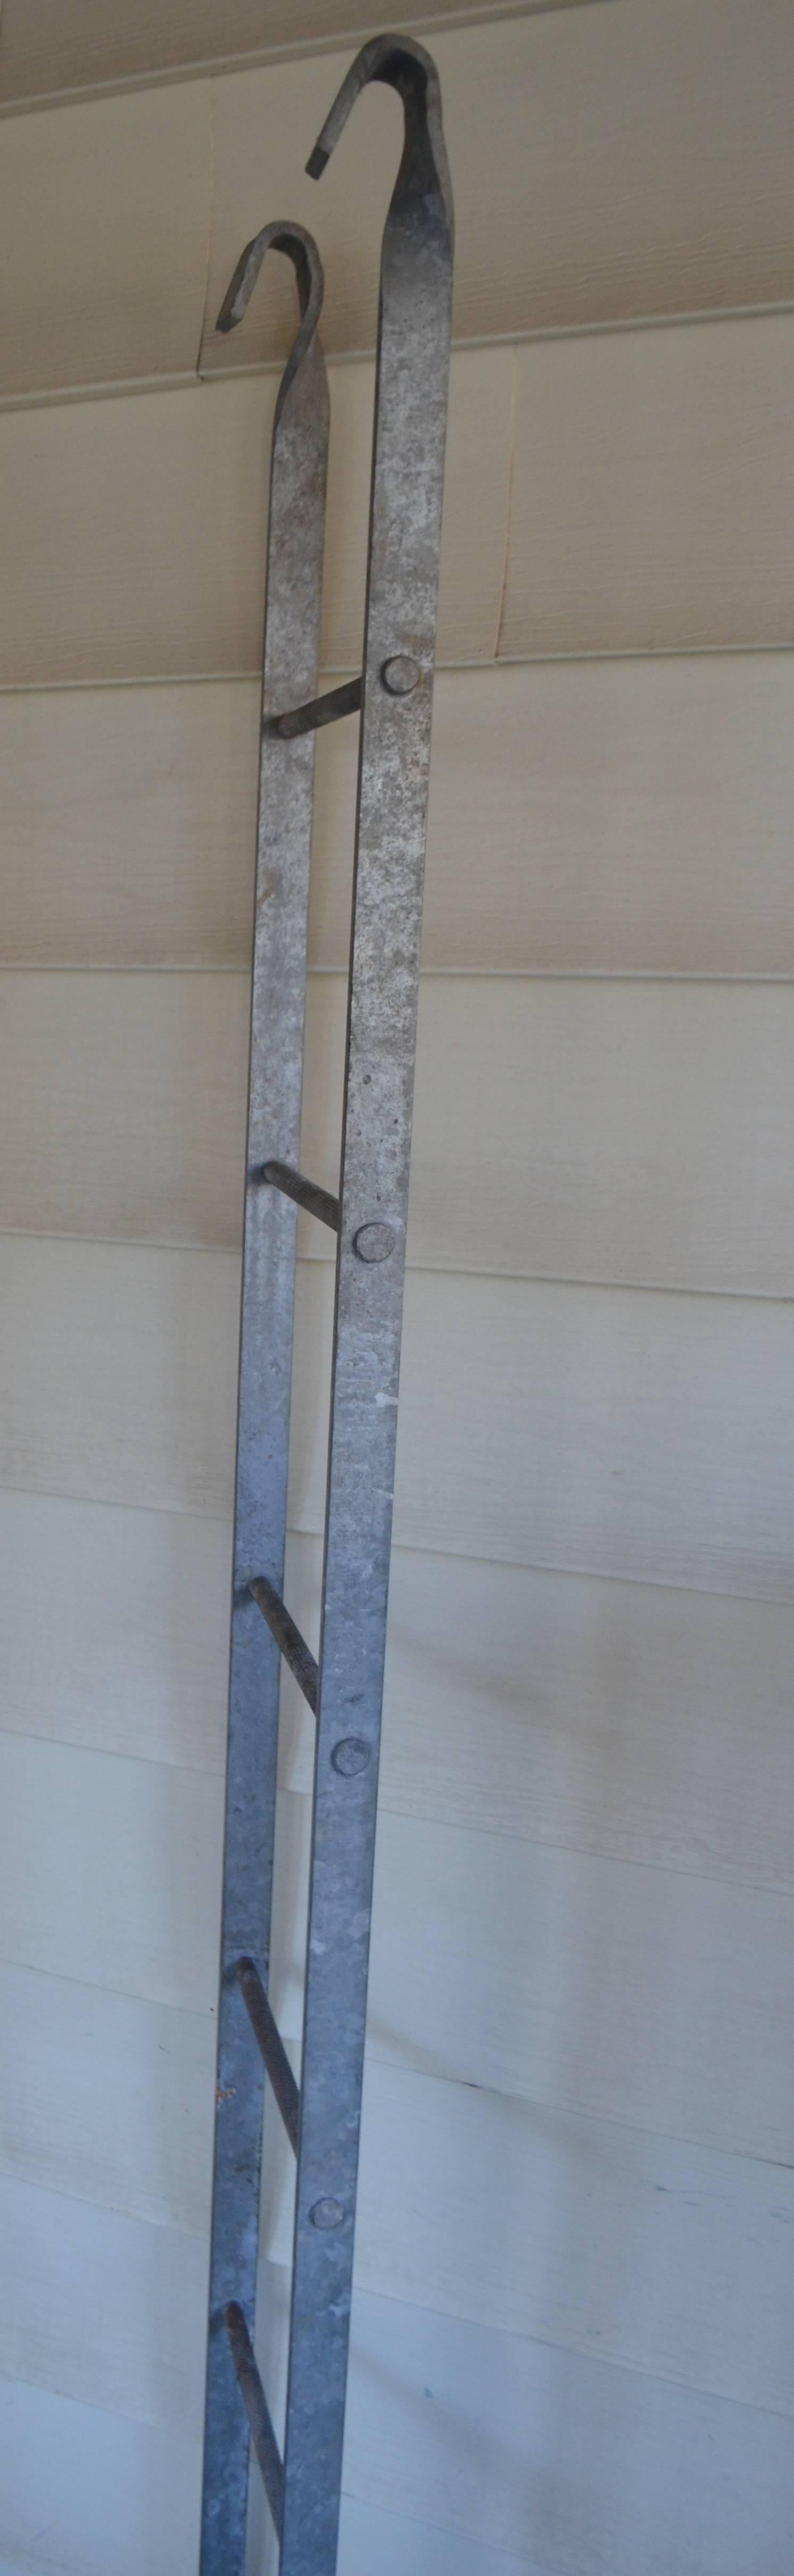 Vintage Galvanized Steel Ladder as Plant Trellis or Sculptural Wall Art 2